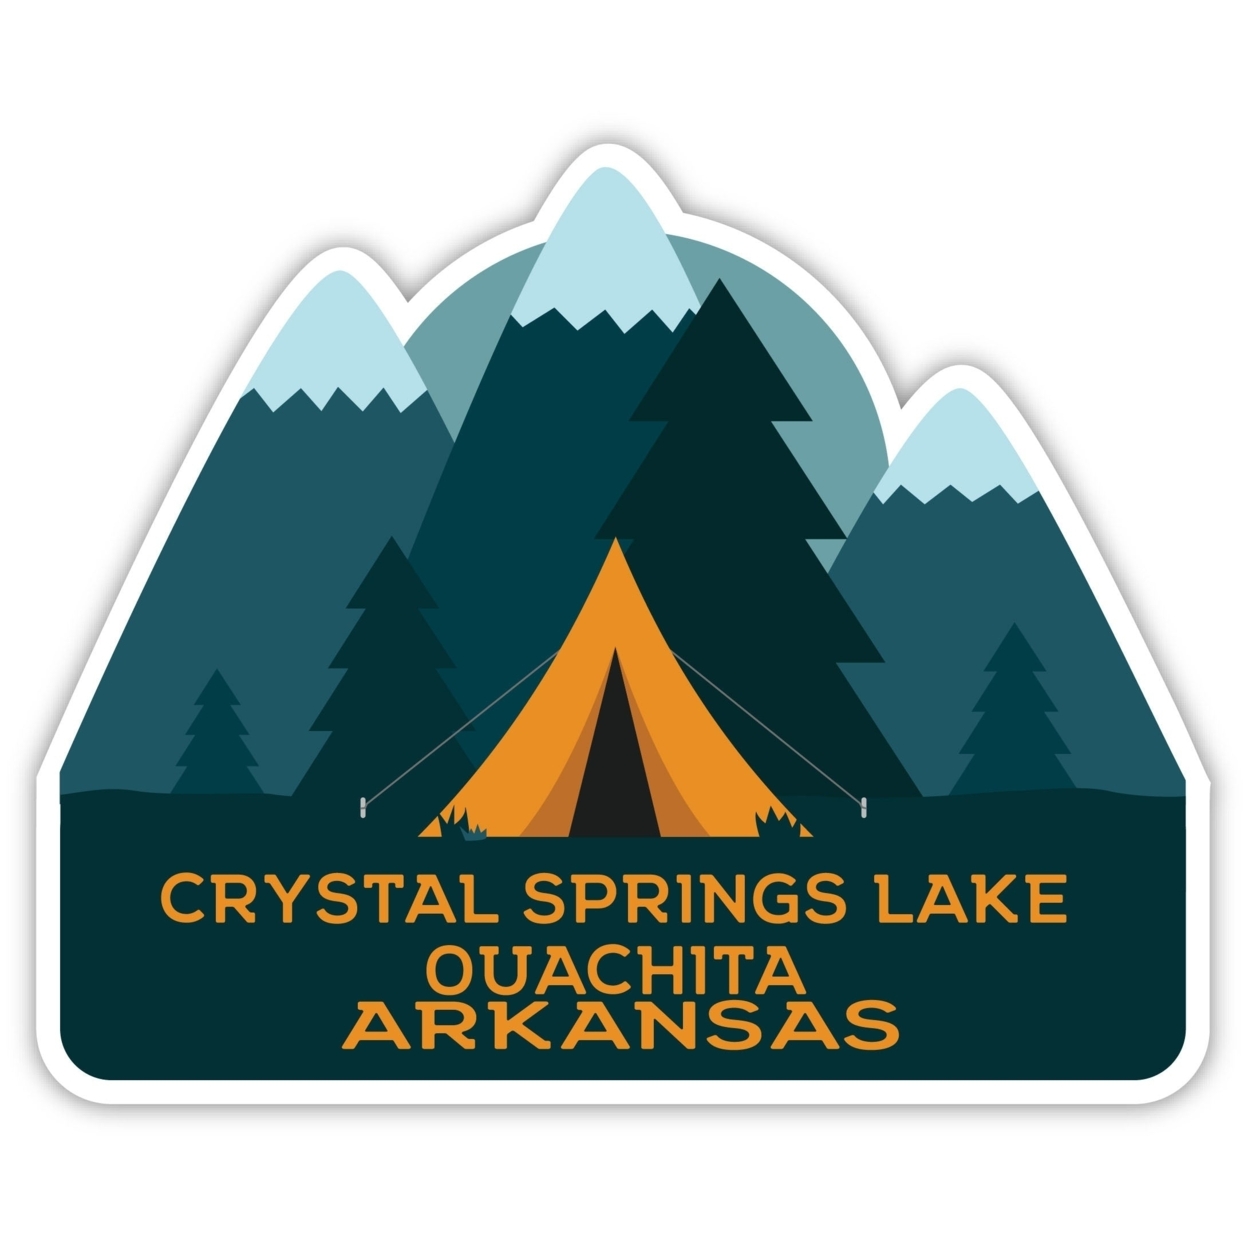 Crystal Springs Lake Ouachita Arkansas Souvenir Decorative Stickers (Choose Theme And Size) - 4-Pack, 2-Inch, Bear